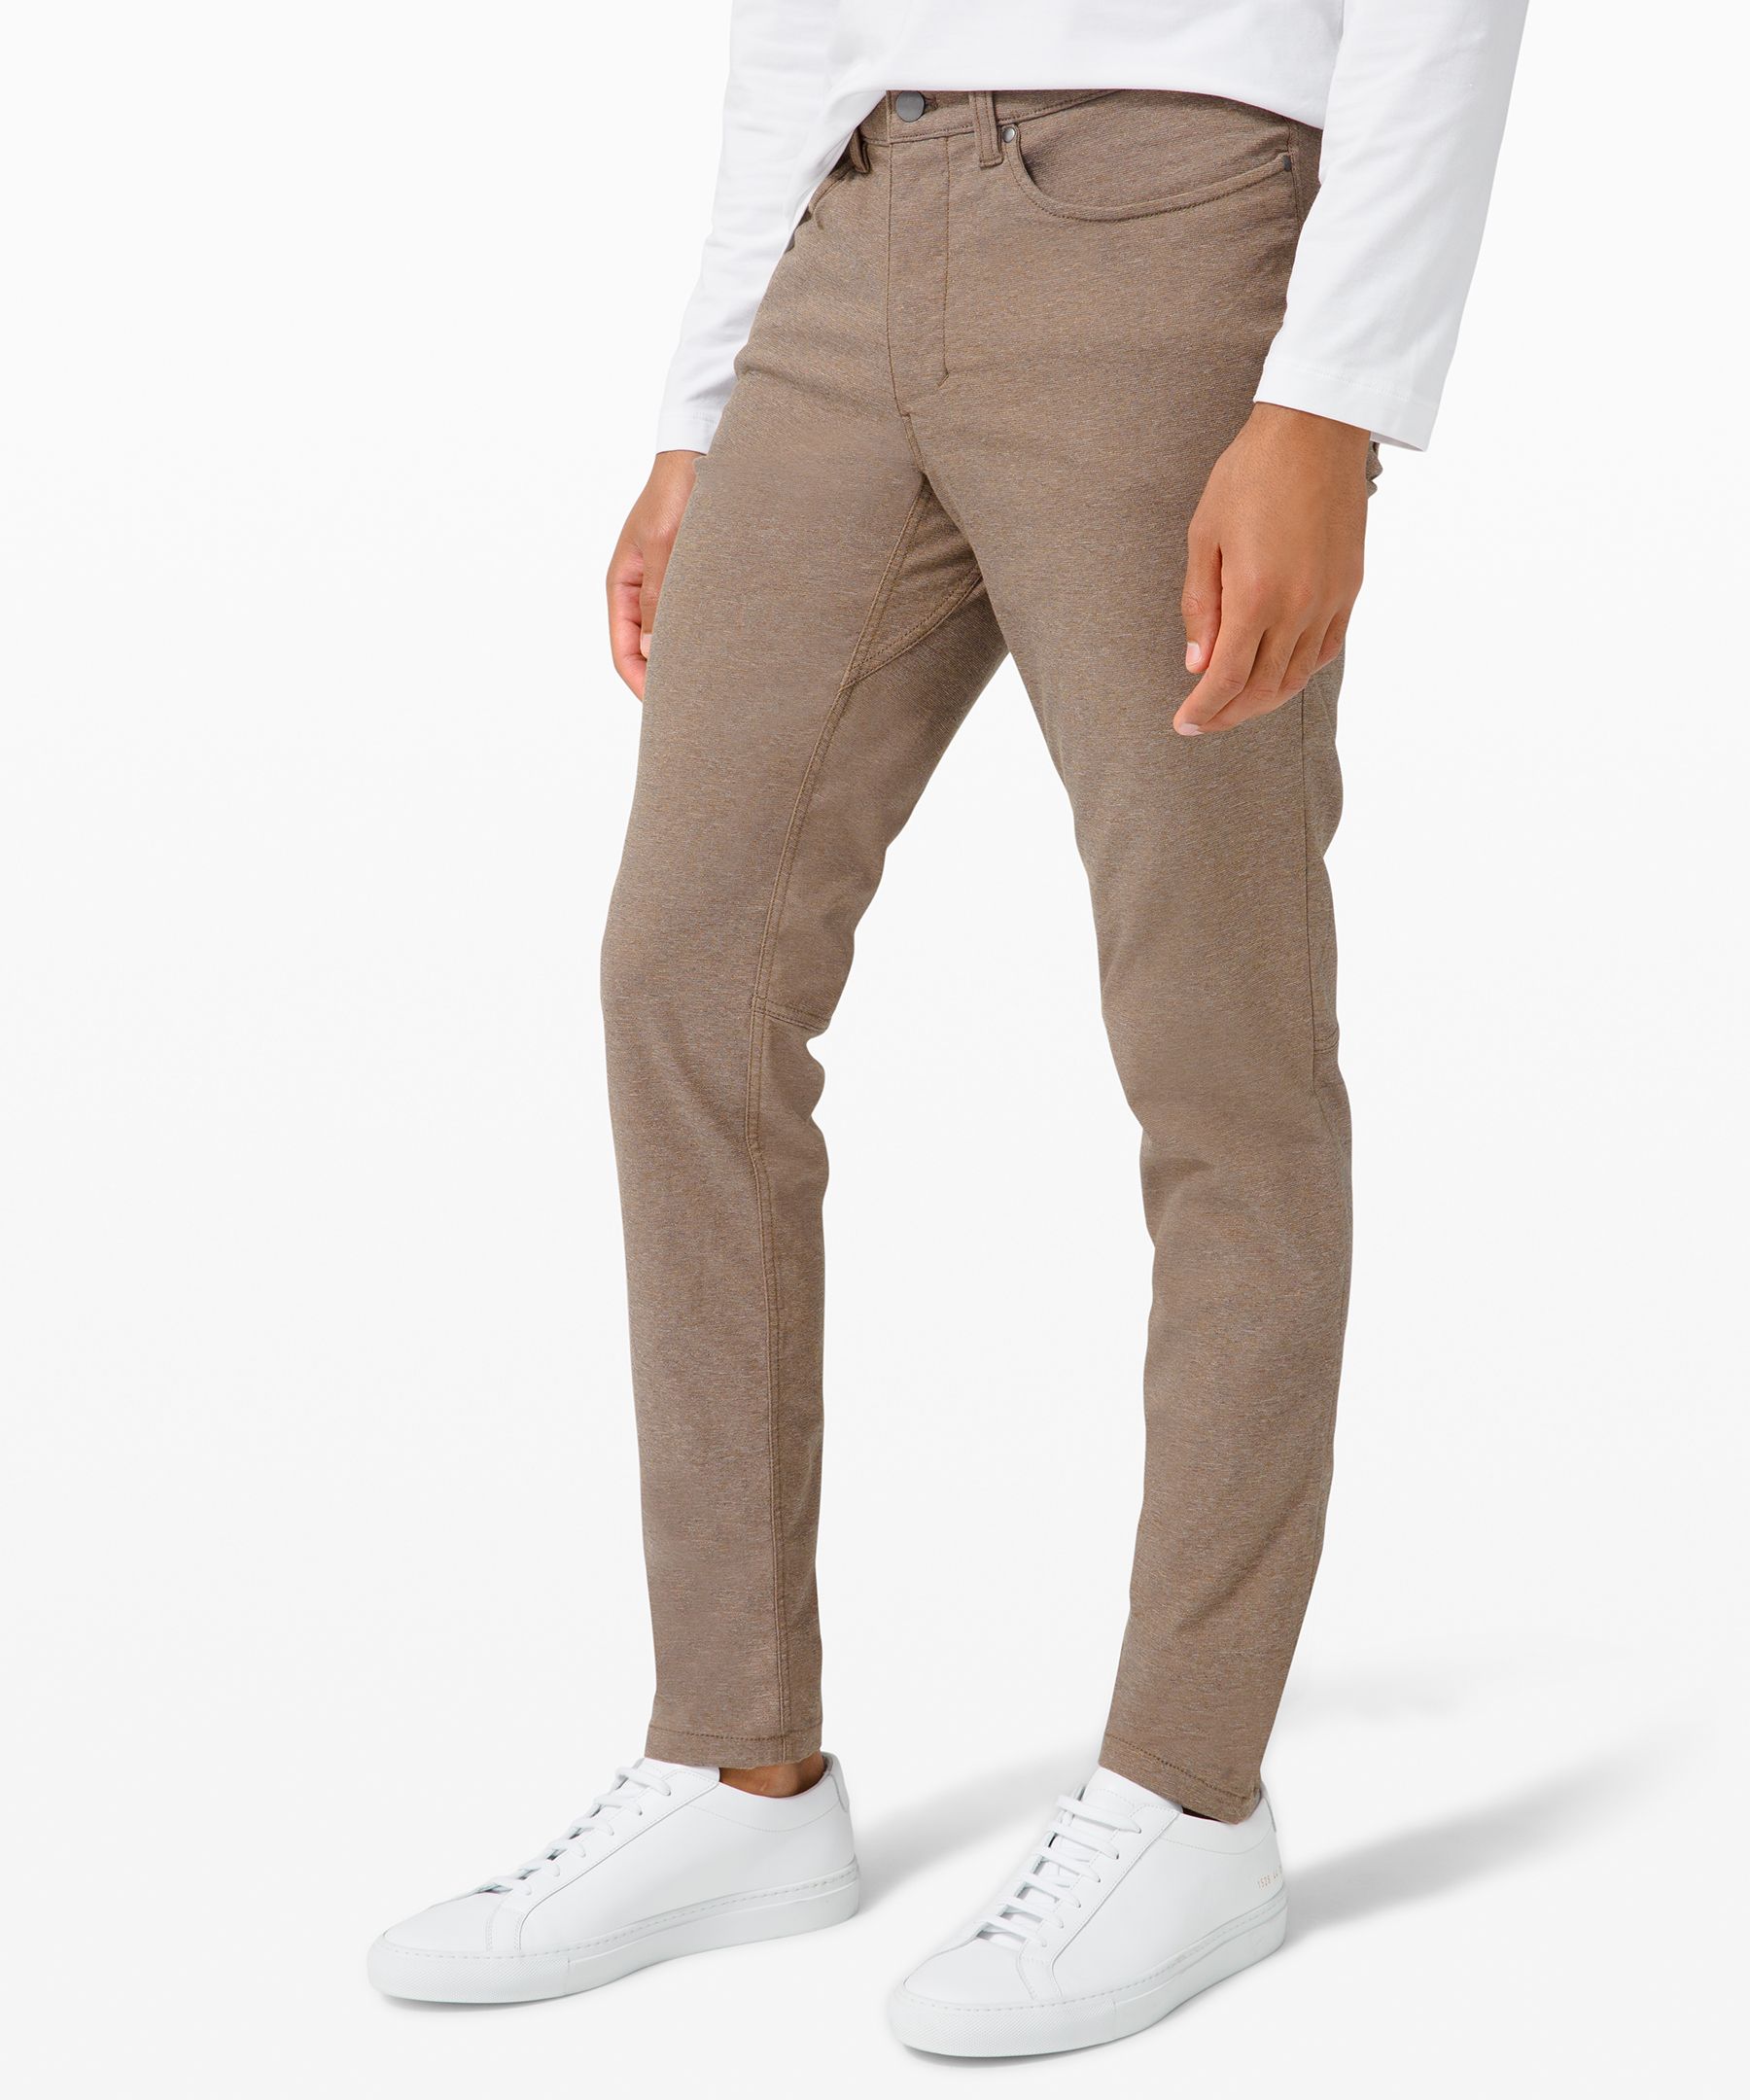 lululemon ABC Slim-Fit Pant 34 L Warpstreme Trench Size:32 MSRP $128.00  *NEW*